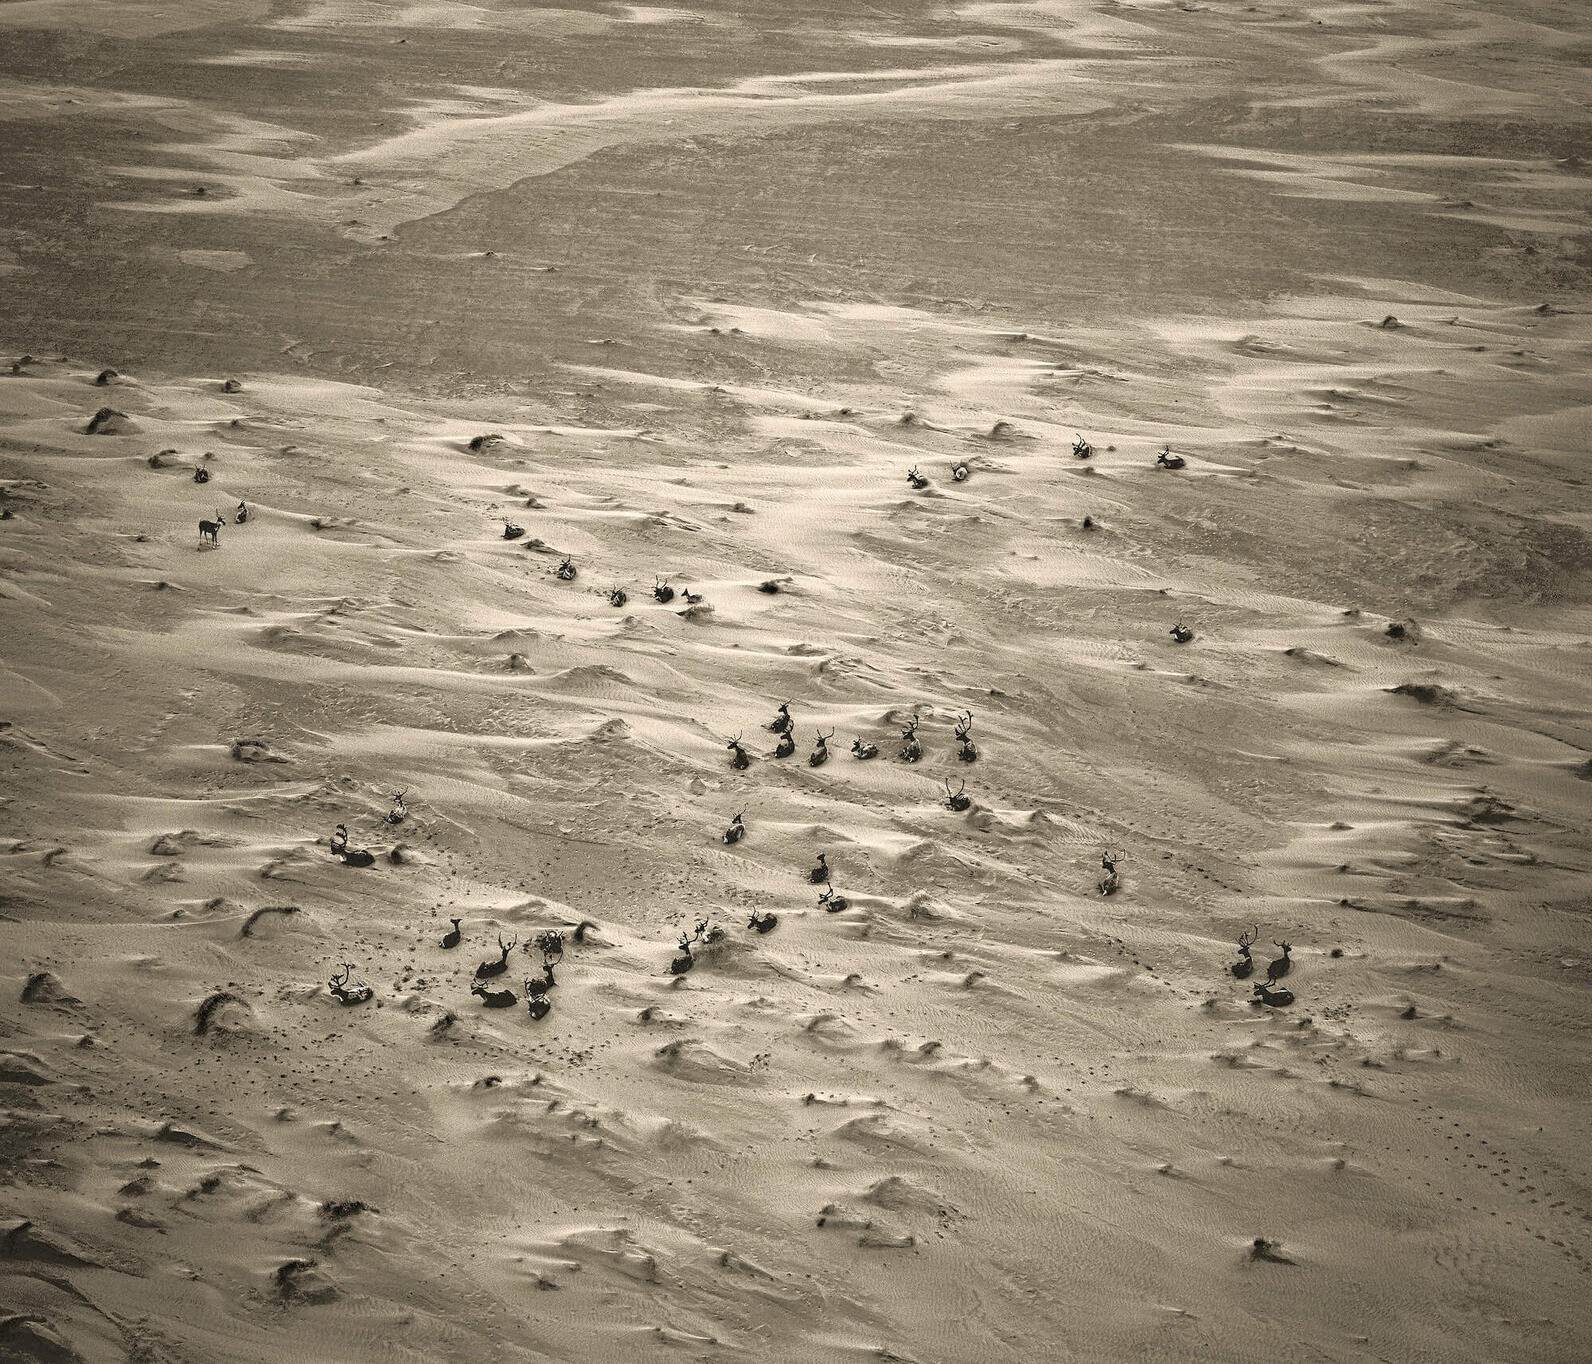 Multiple caribou rest on dunes